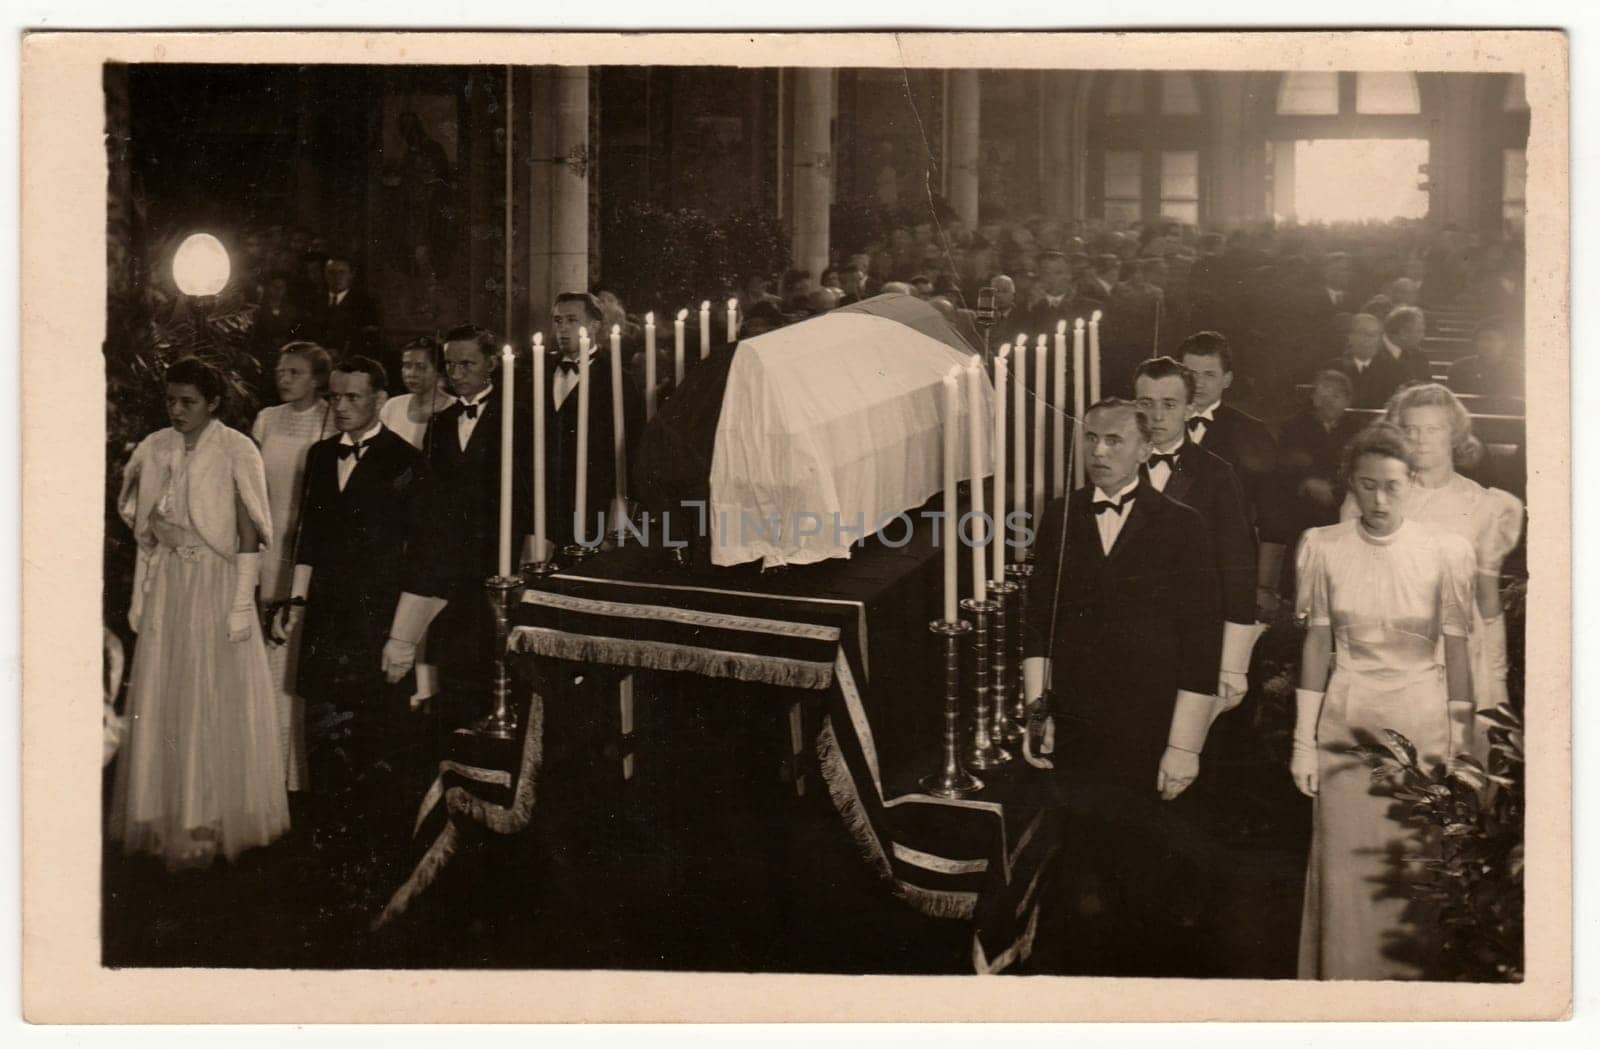 PRAHA PRAGUE, THE CZECHOSLOVAK REPUBLIC - MAY 7, 1939: Vintage photo shows the funeral of Karel Hynek Macha famous Czech poet. Retro black and white photography.